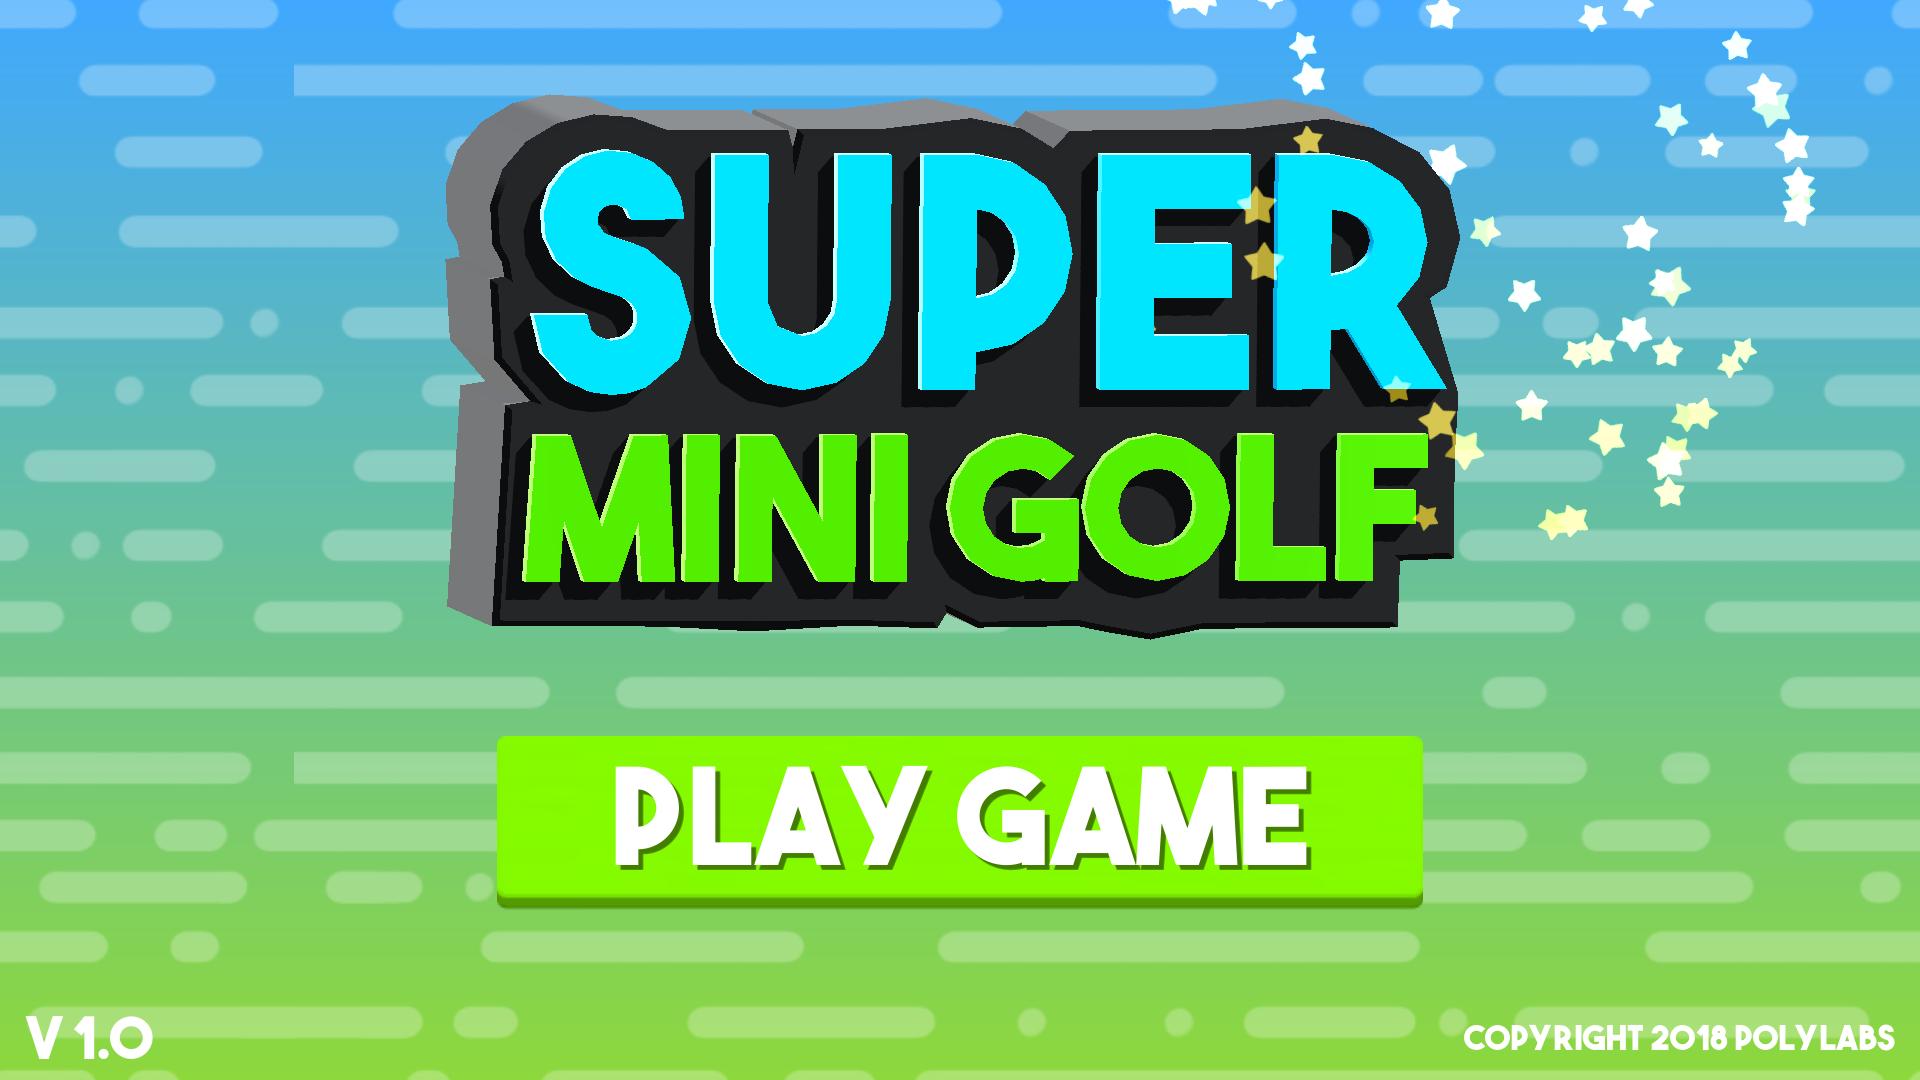 Super MiniGolf for Android - APK Download